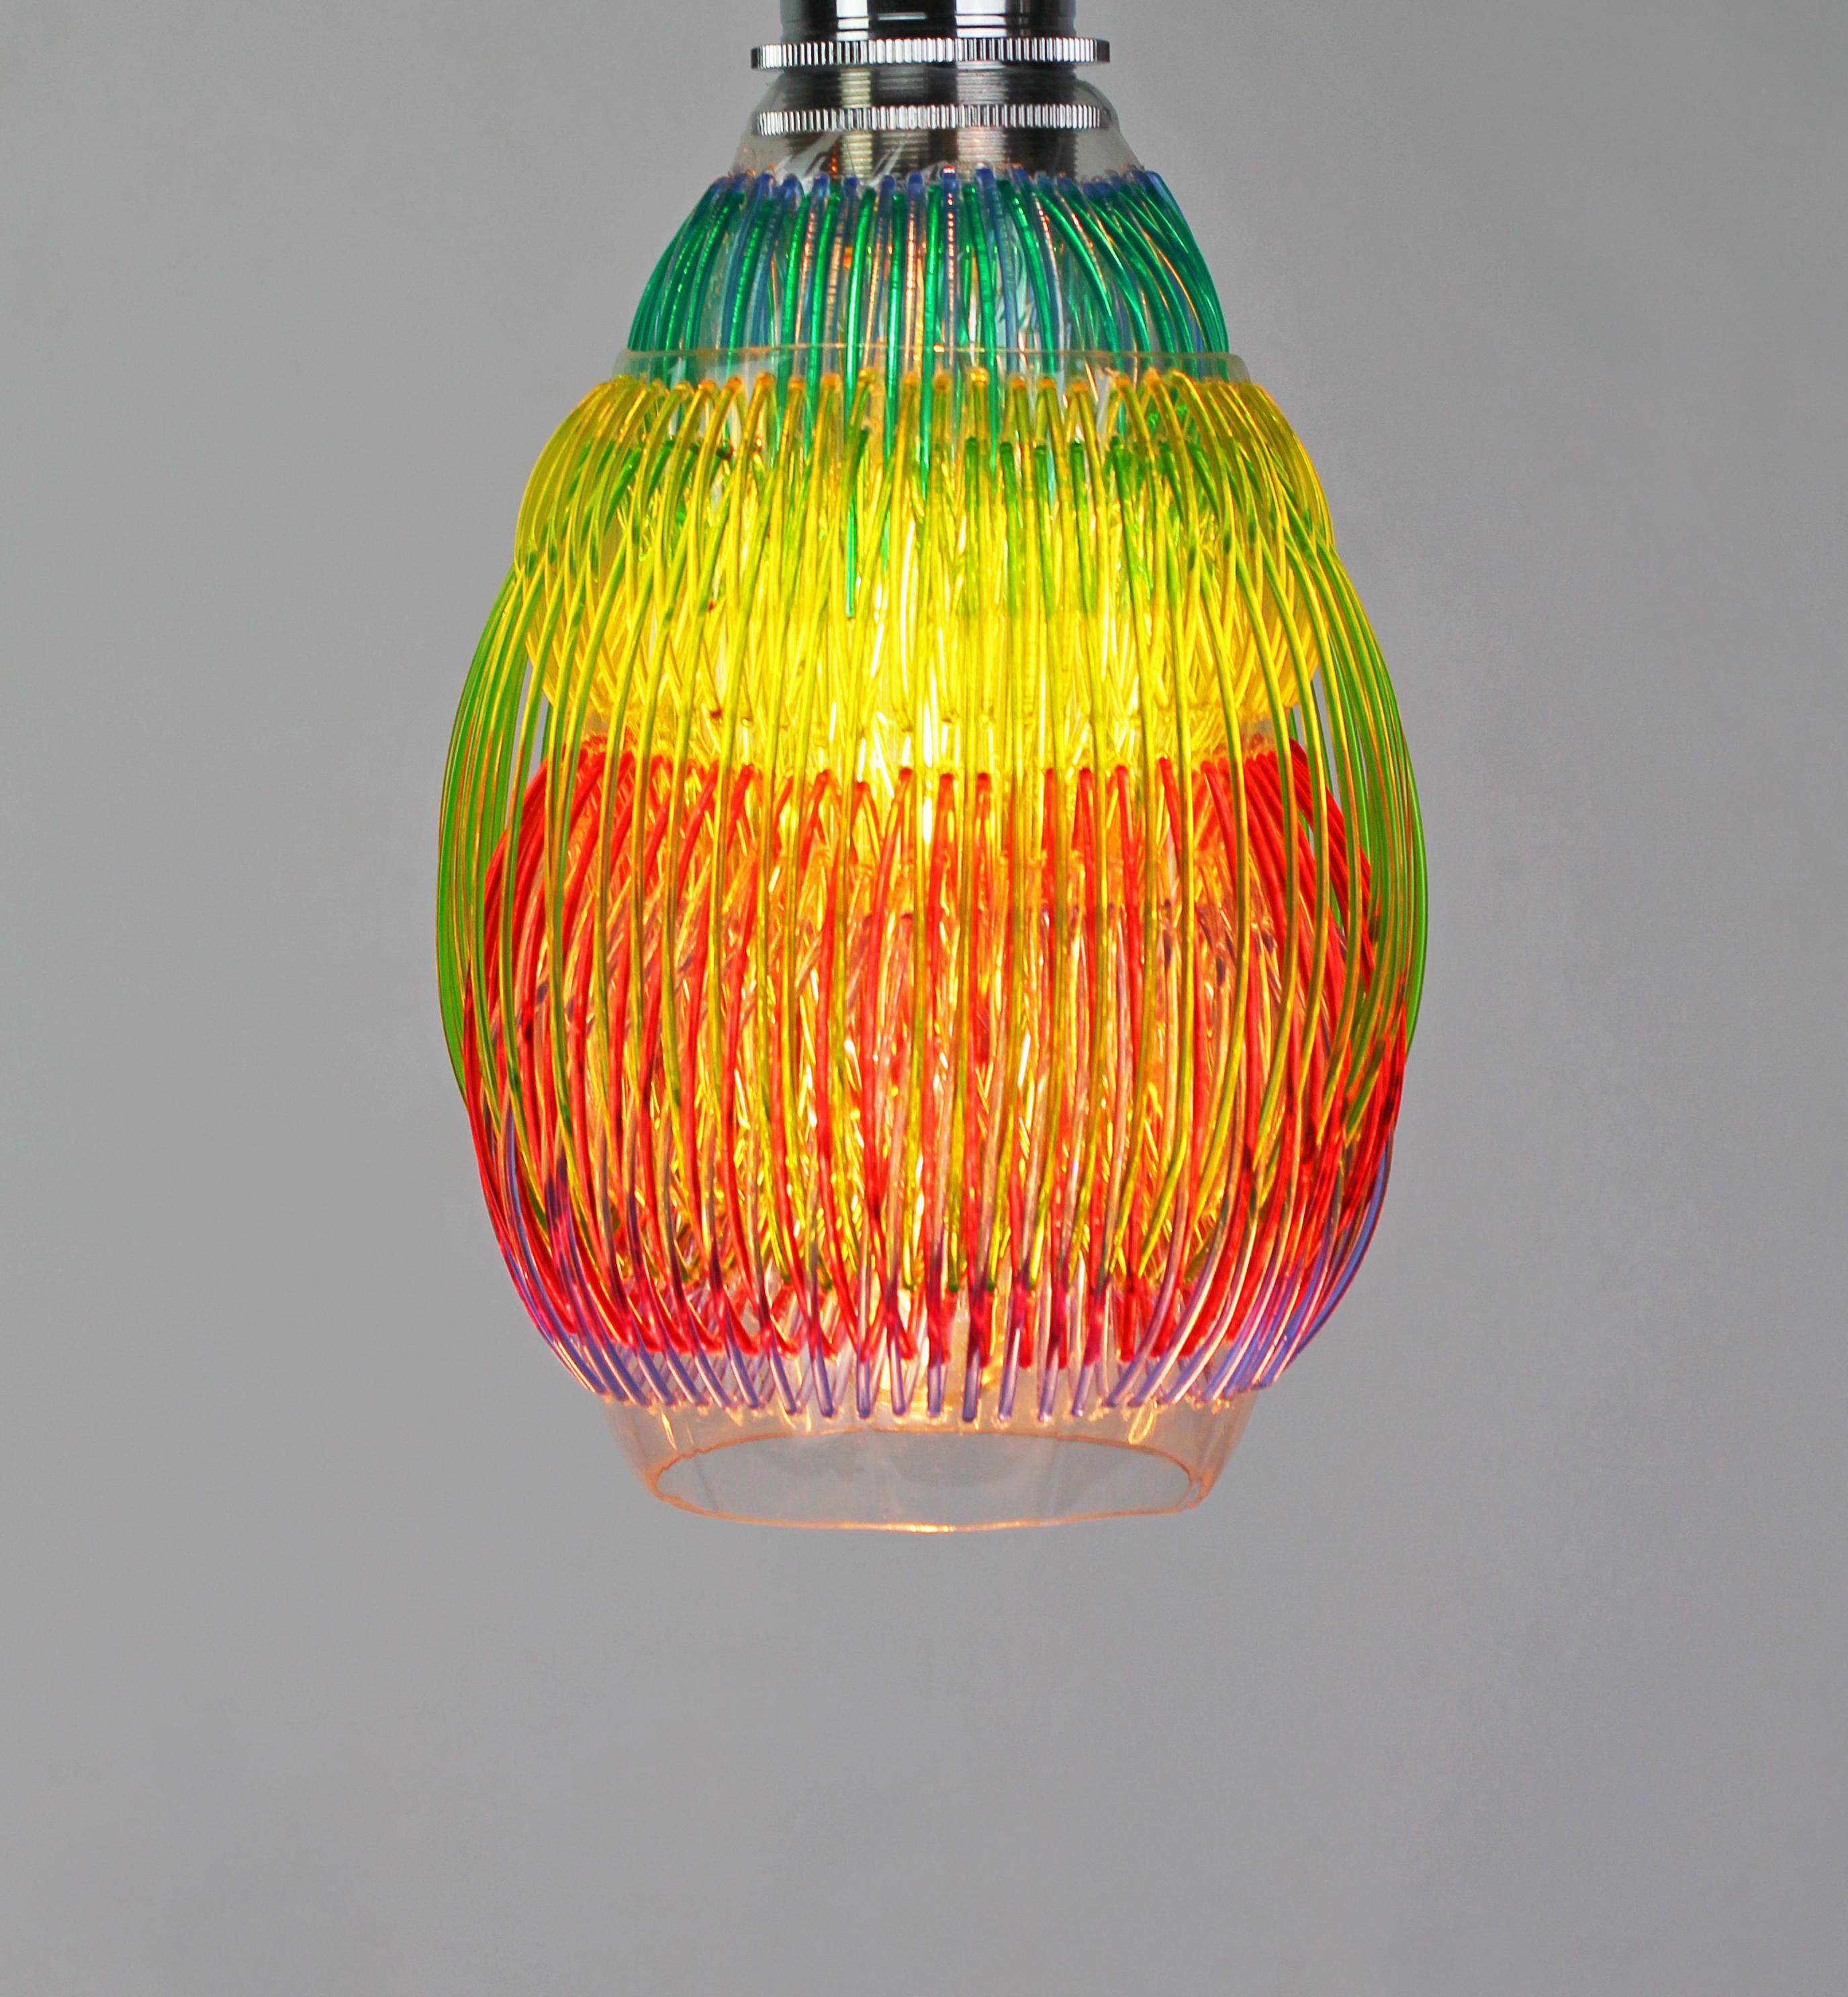 German Lluvia 001 Pendant Lamp by Anabella Georgi